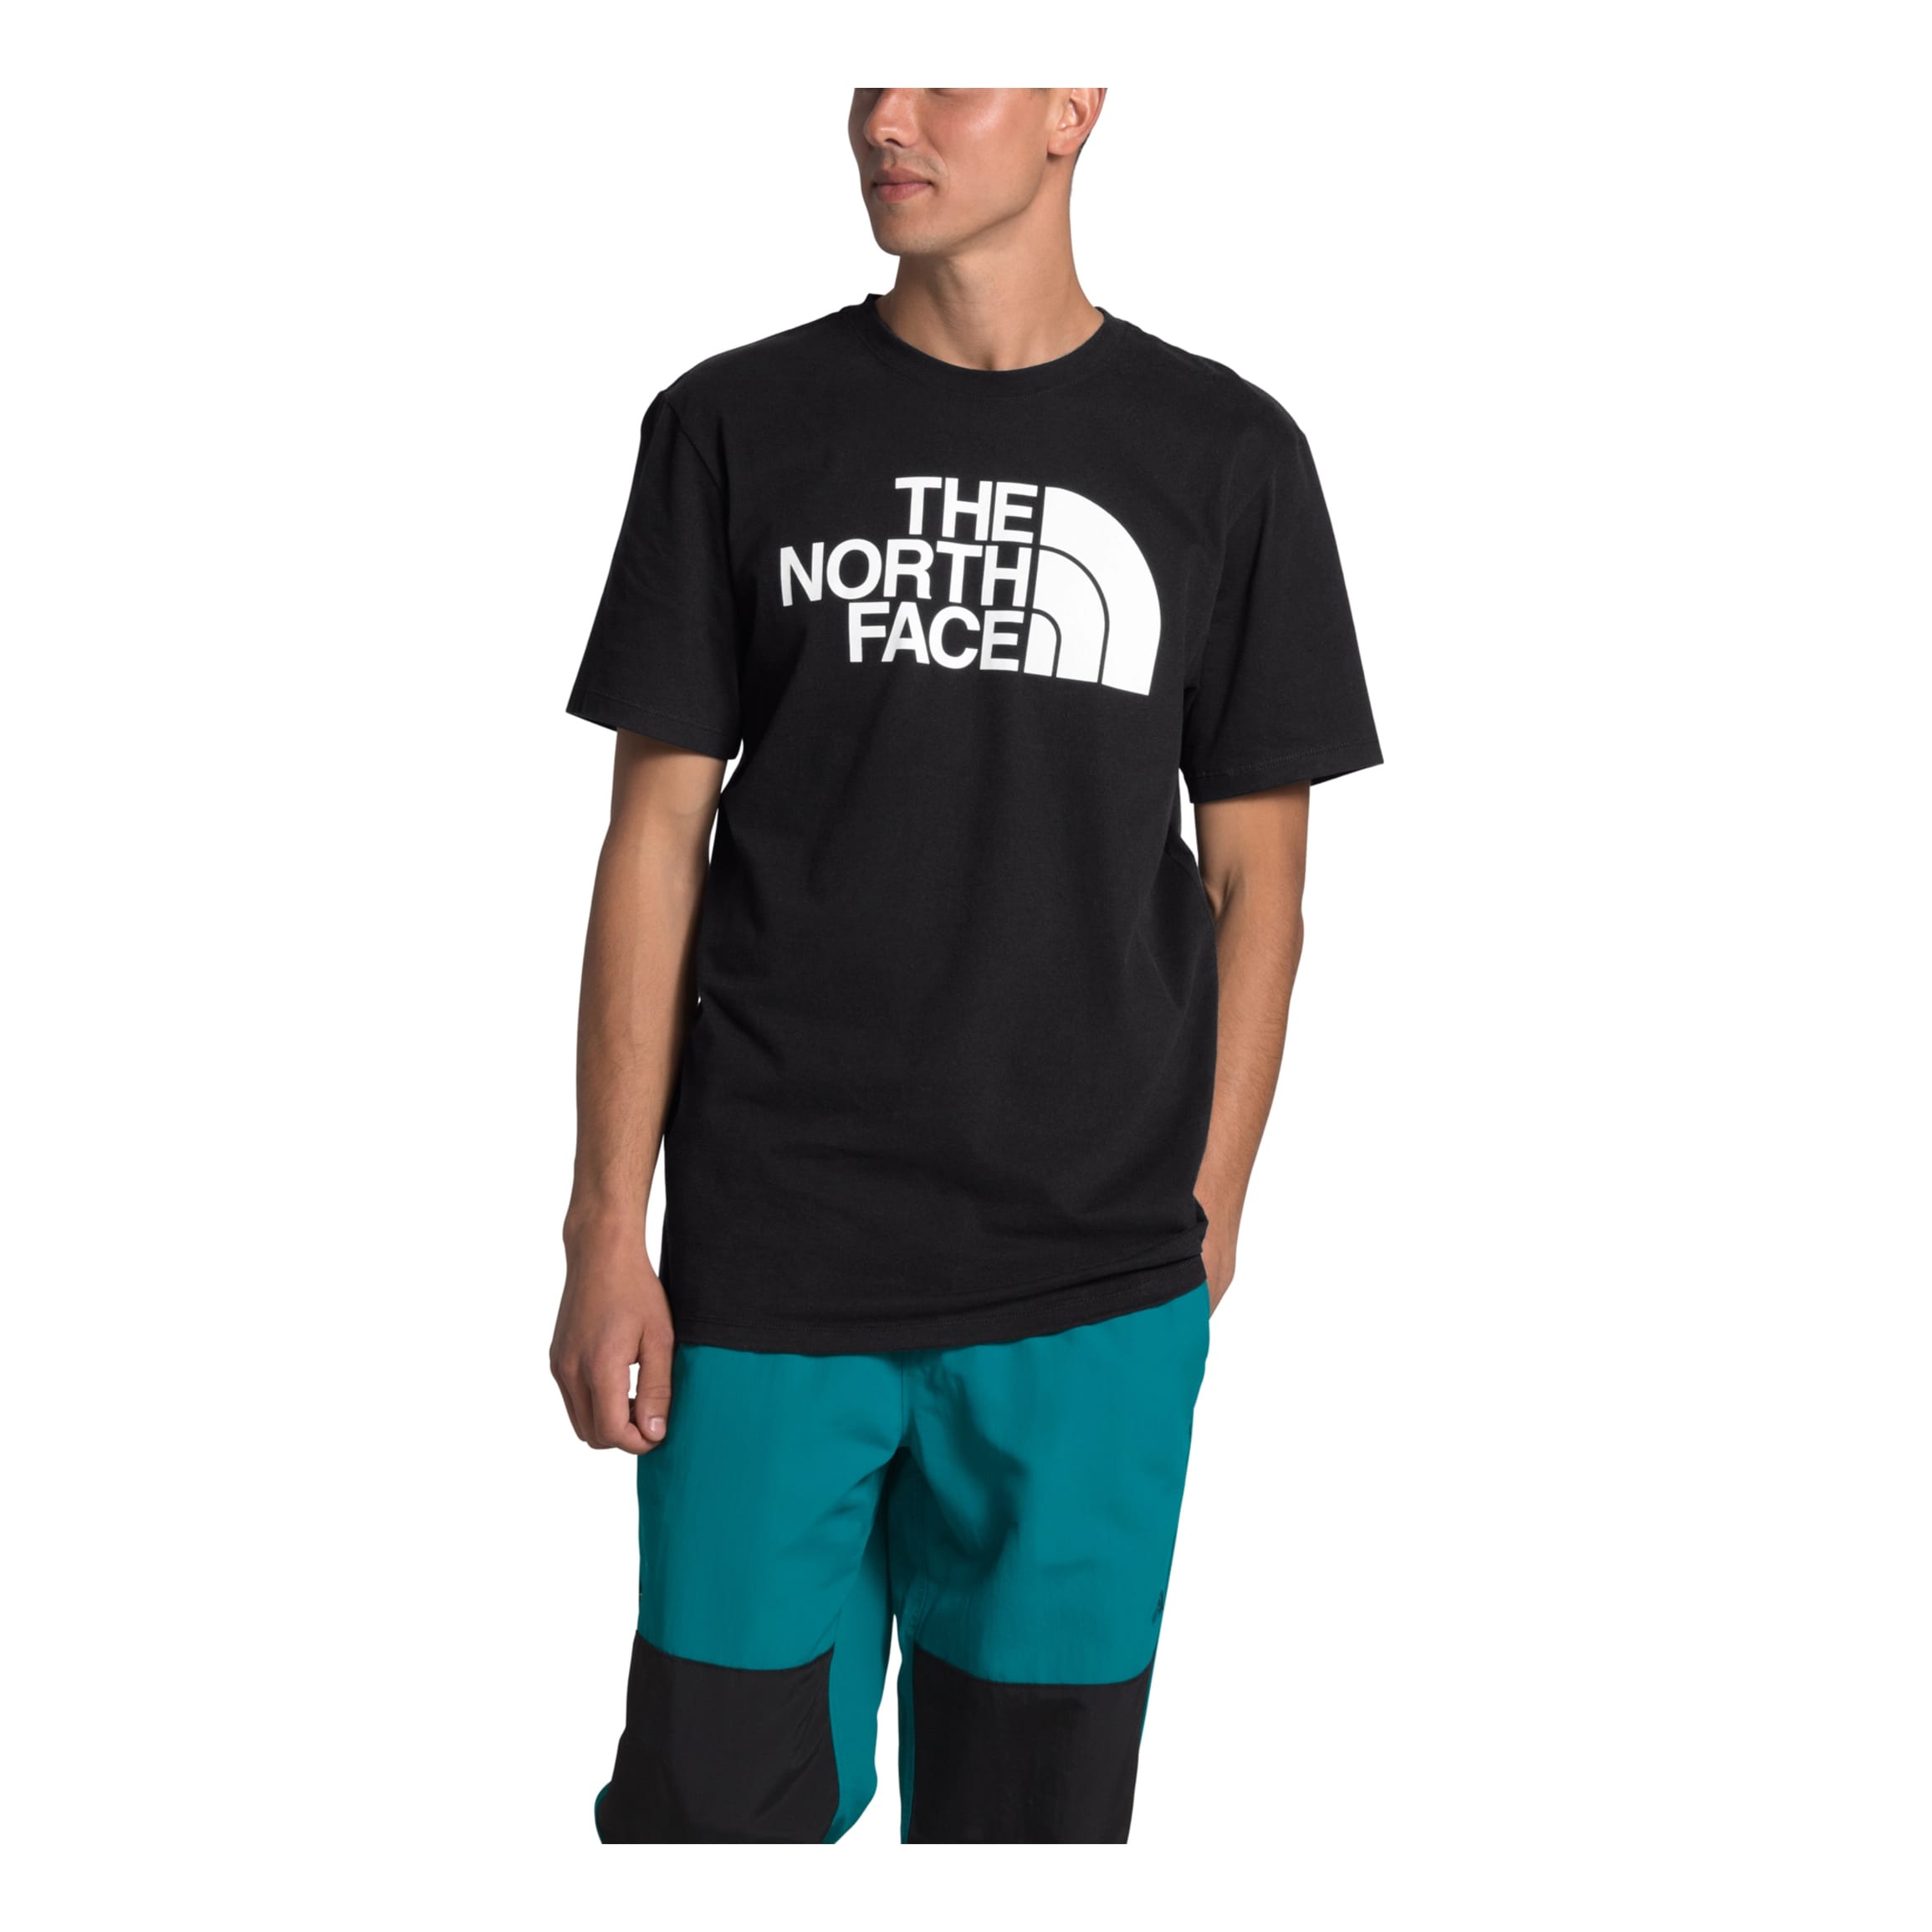 Bass Pro Shops Men’s Squatch Scotch Logo Short-Sleeve T-Shirt 